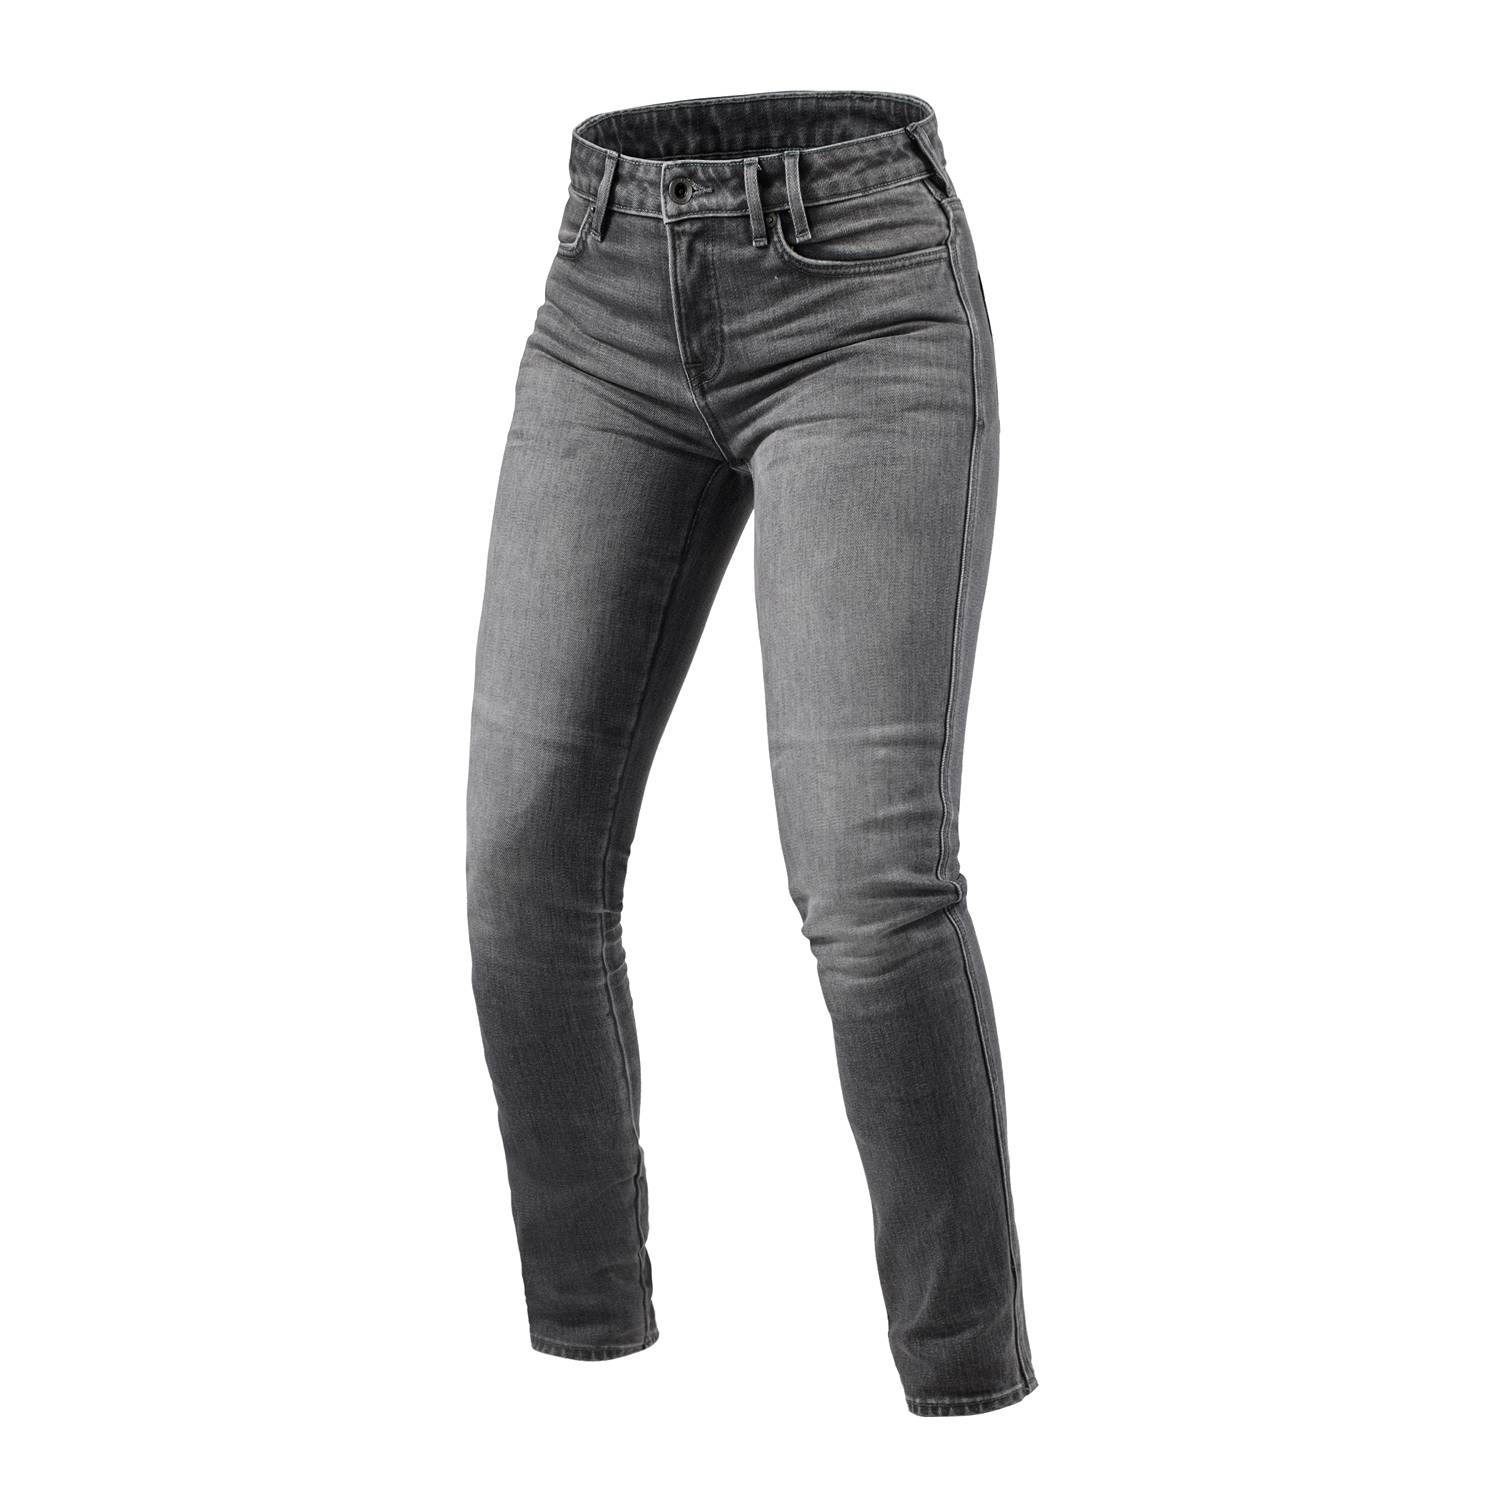 Image of REV'IT! Jeans Shelby 2 Ladies SK Medium Grey Stone L32 Size L32/W27 ID 8700001376617